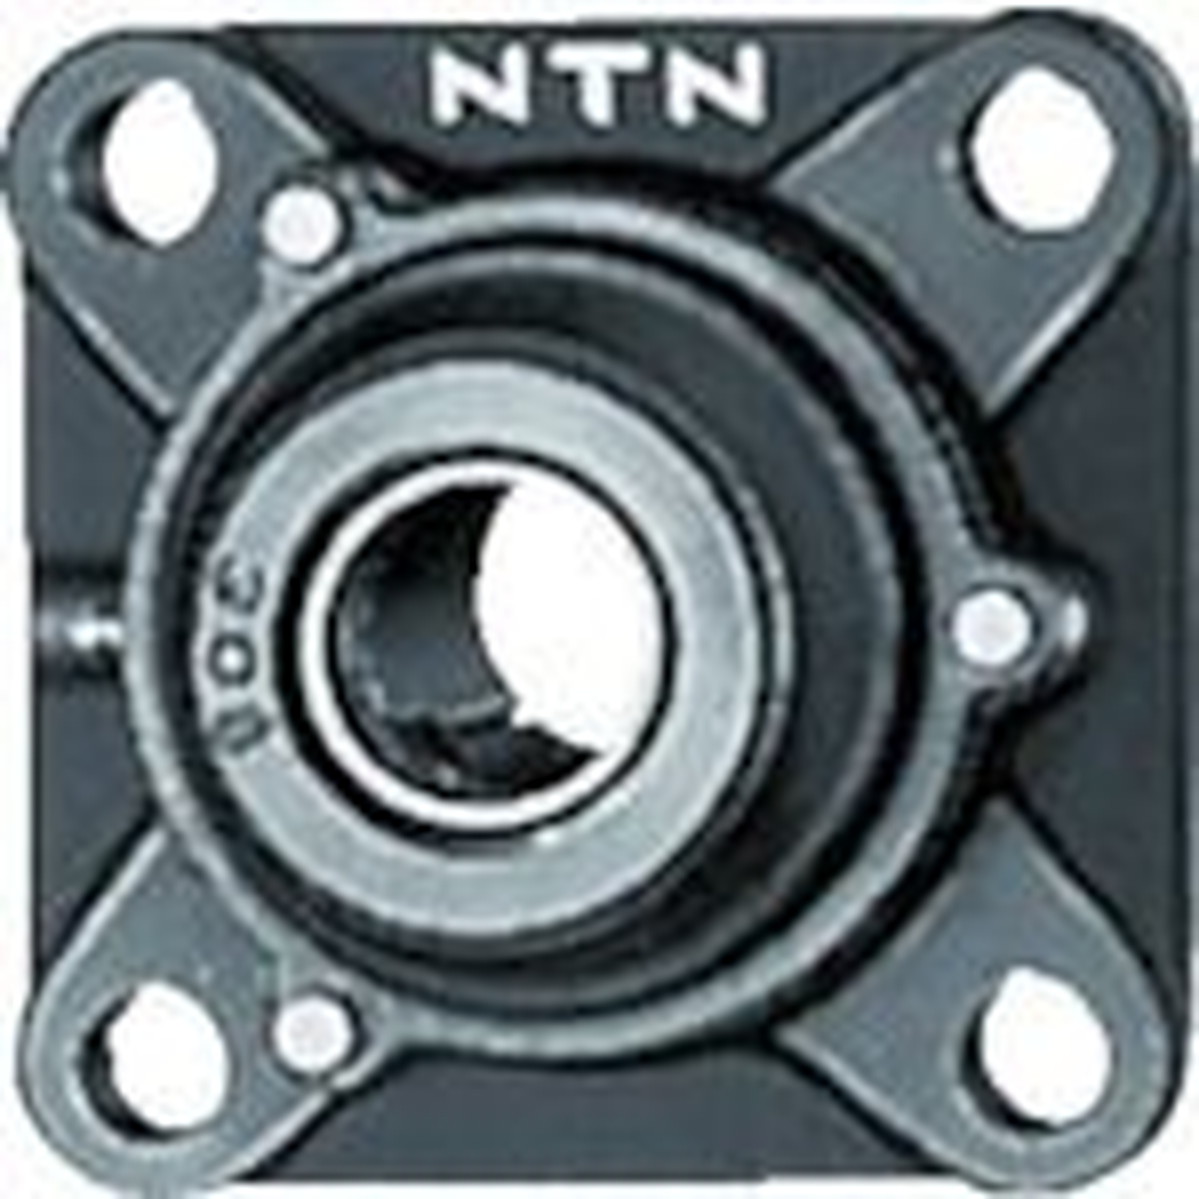 NTN G ベアリングユニット(円筒穴形、止めねじ式)軸径90mm内輪径90mm